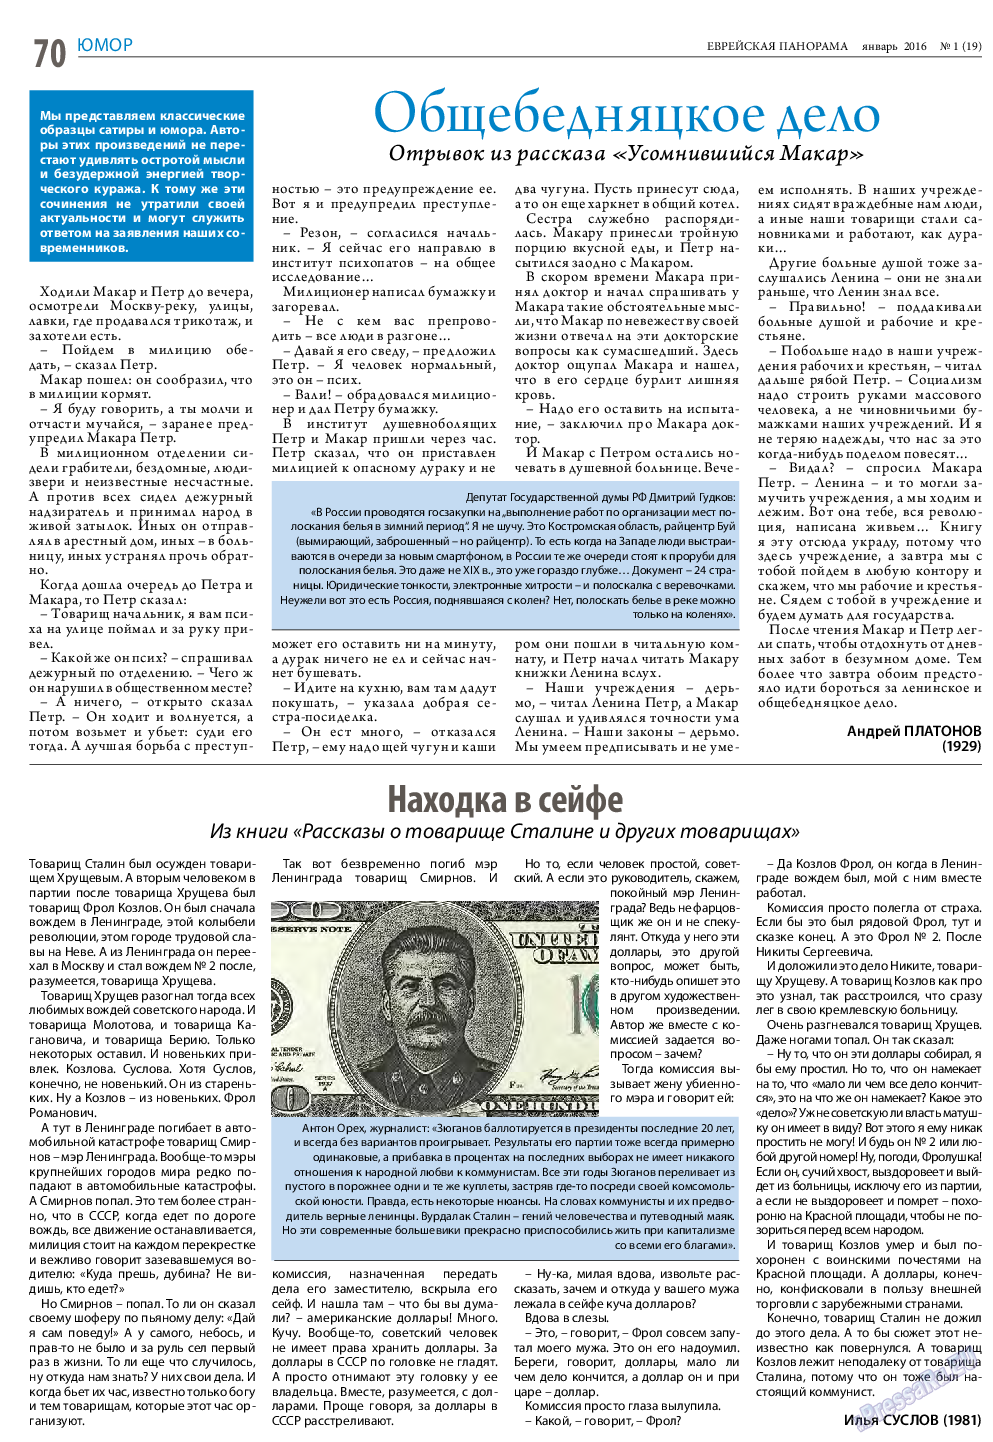 Еврейская панорама, газета. 2016 №1 стр.70